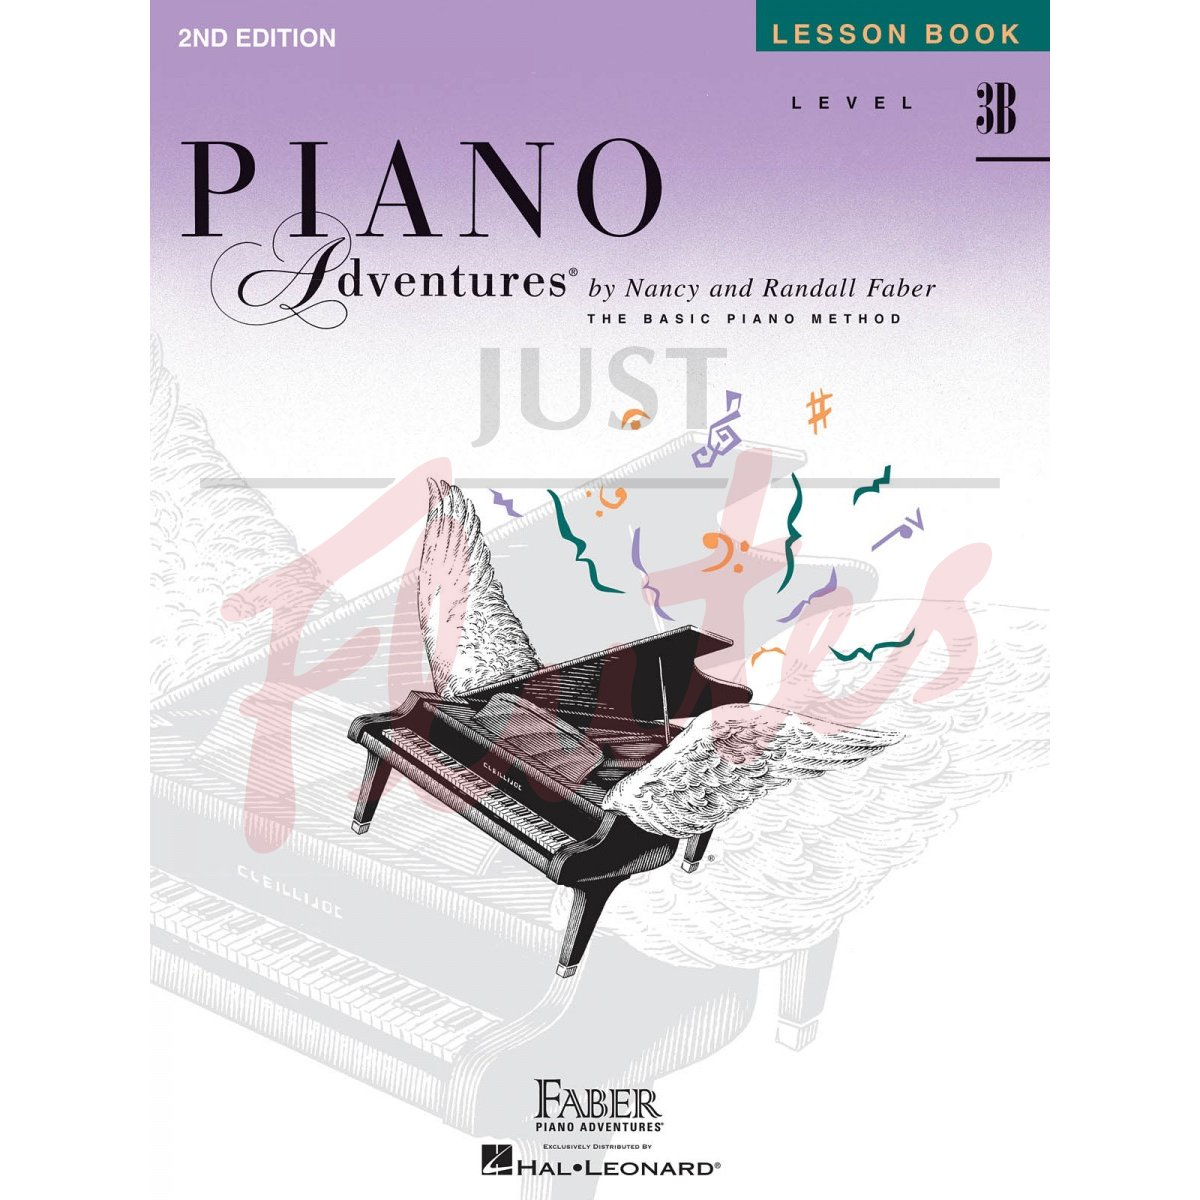 Piano Adventures - Lesson Book Level 3B